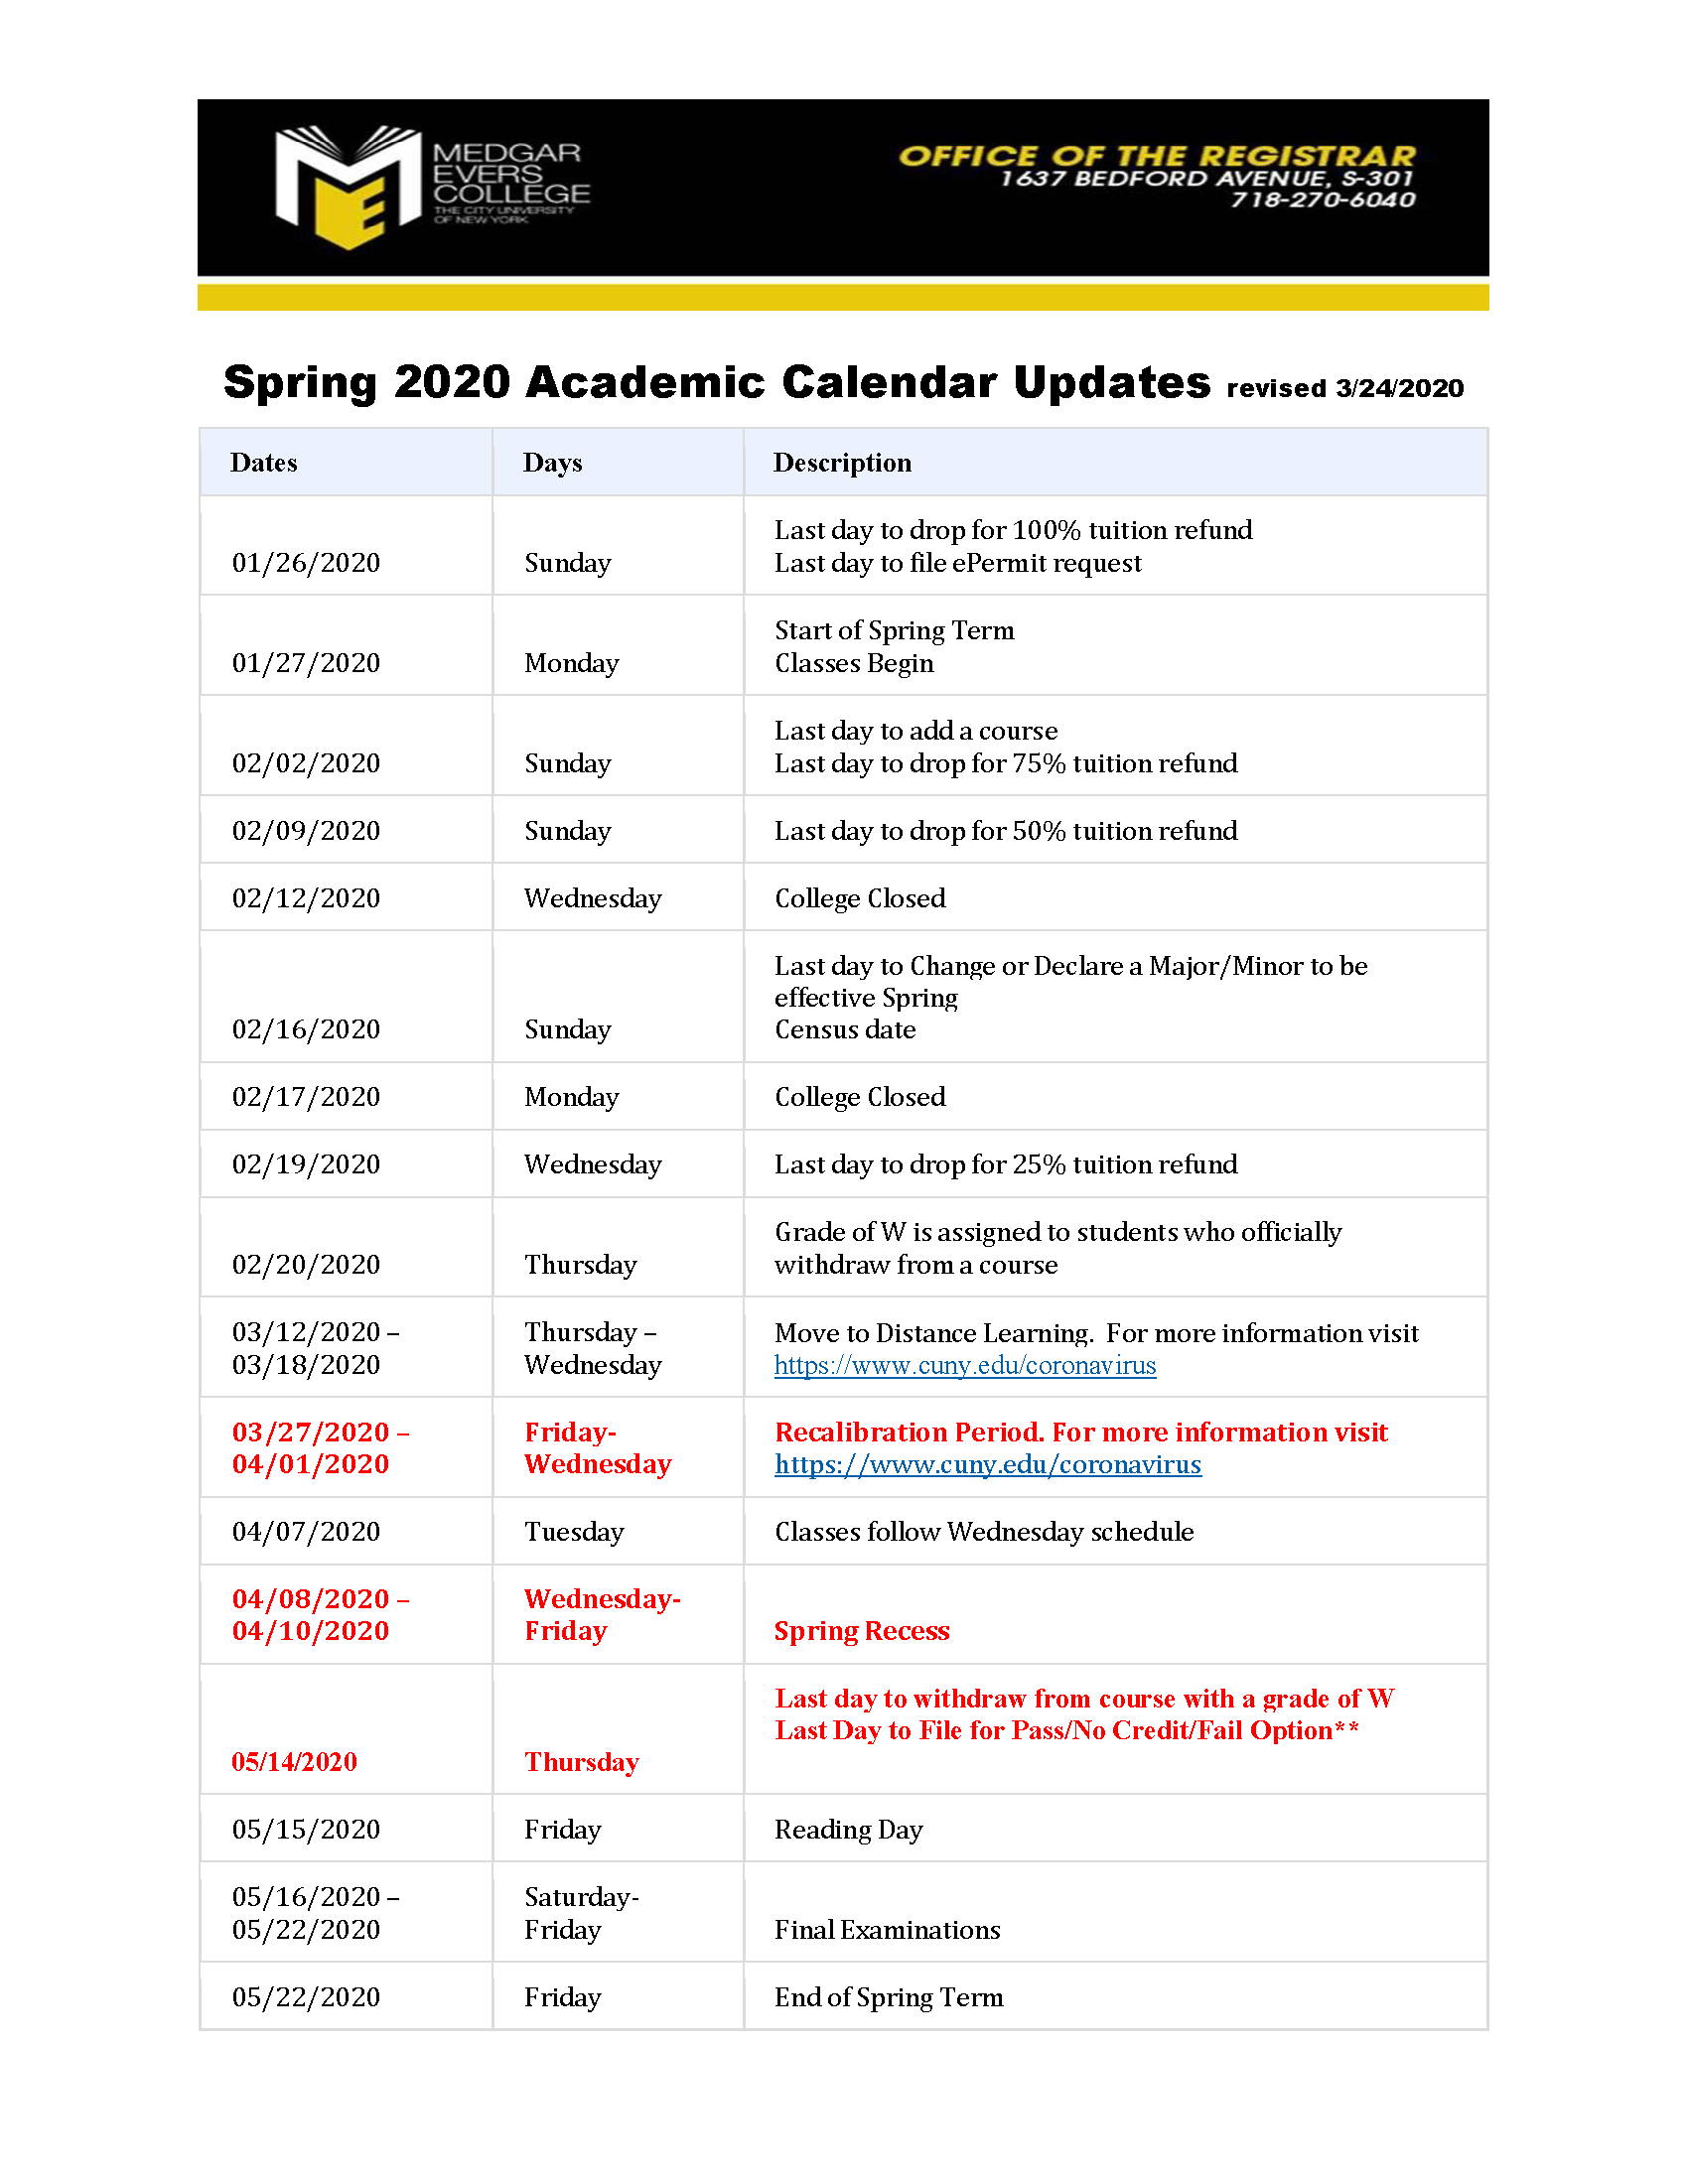 arizona-state-university-spring-2024-calendar-web-add-the-asu